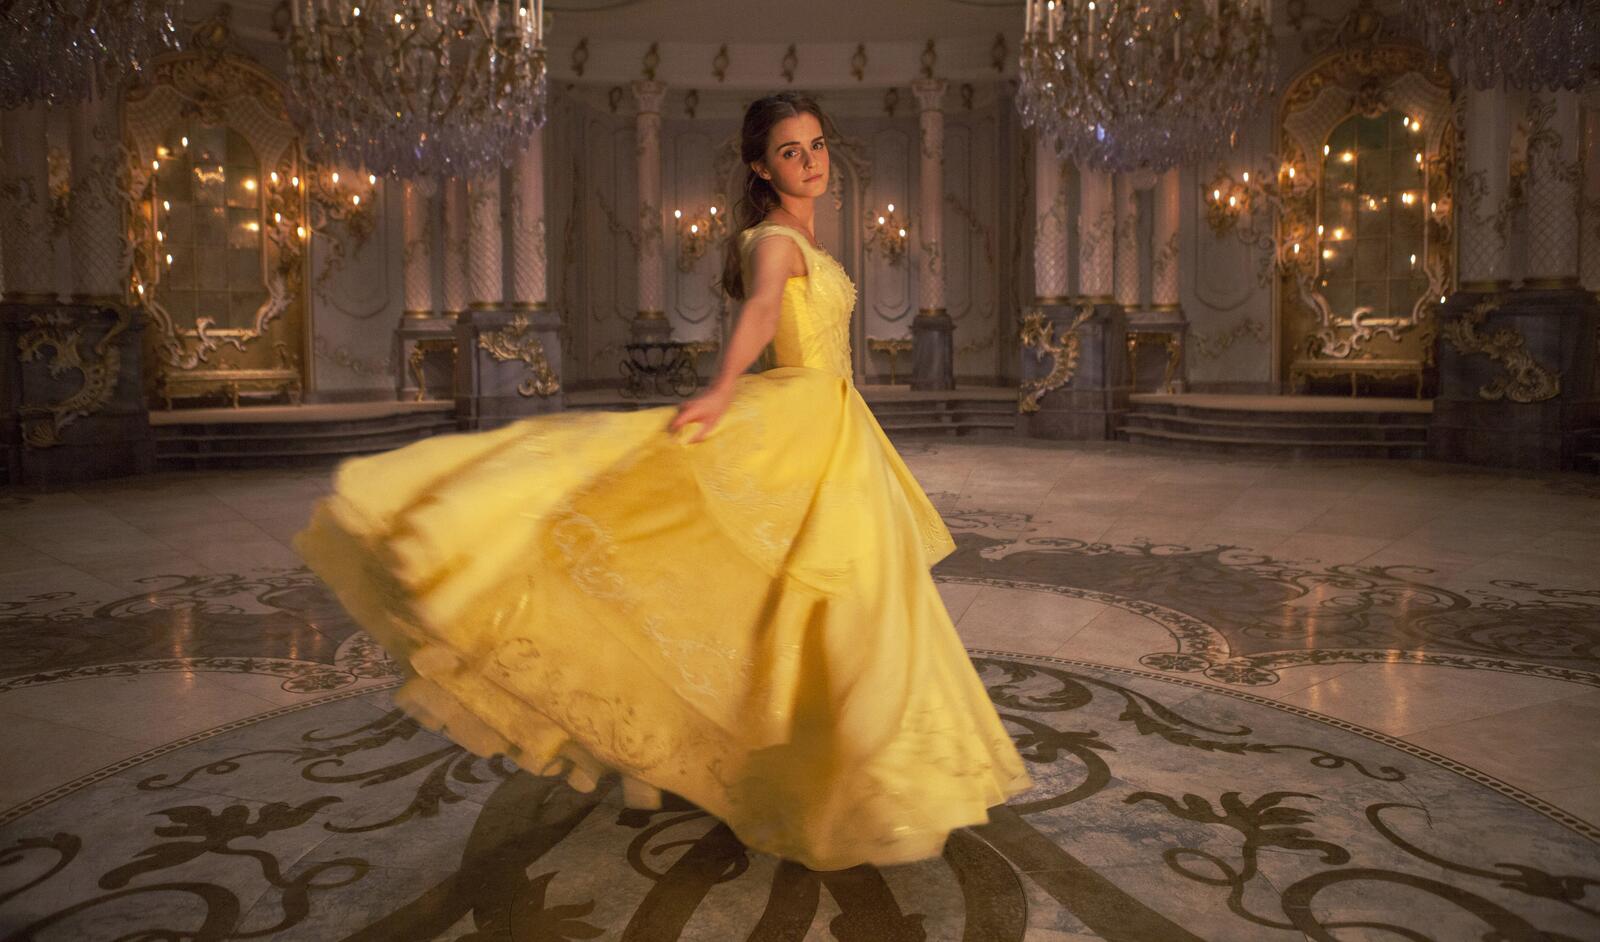 Free photo Emma Watson dances in a yellow dress